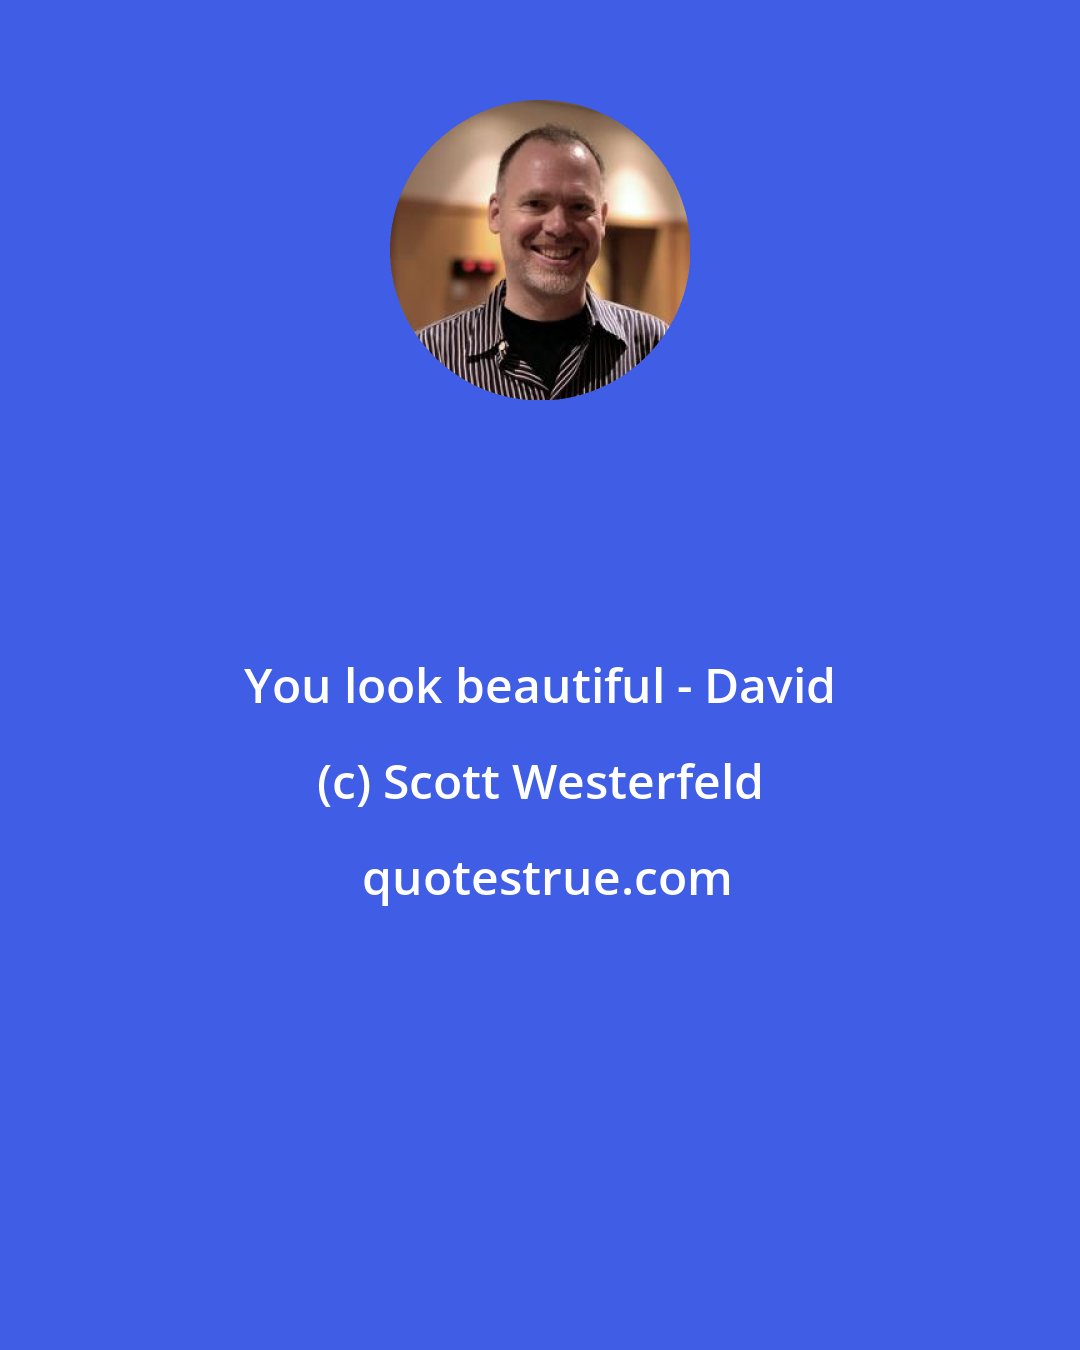 Scott Westerfeld: You look beautiful - David